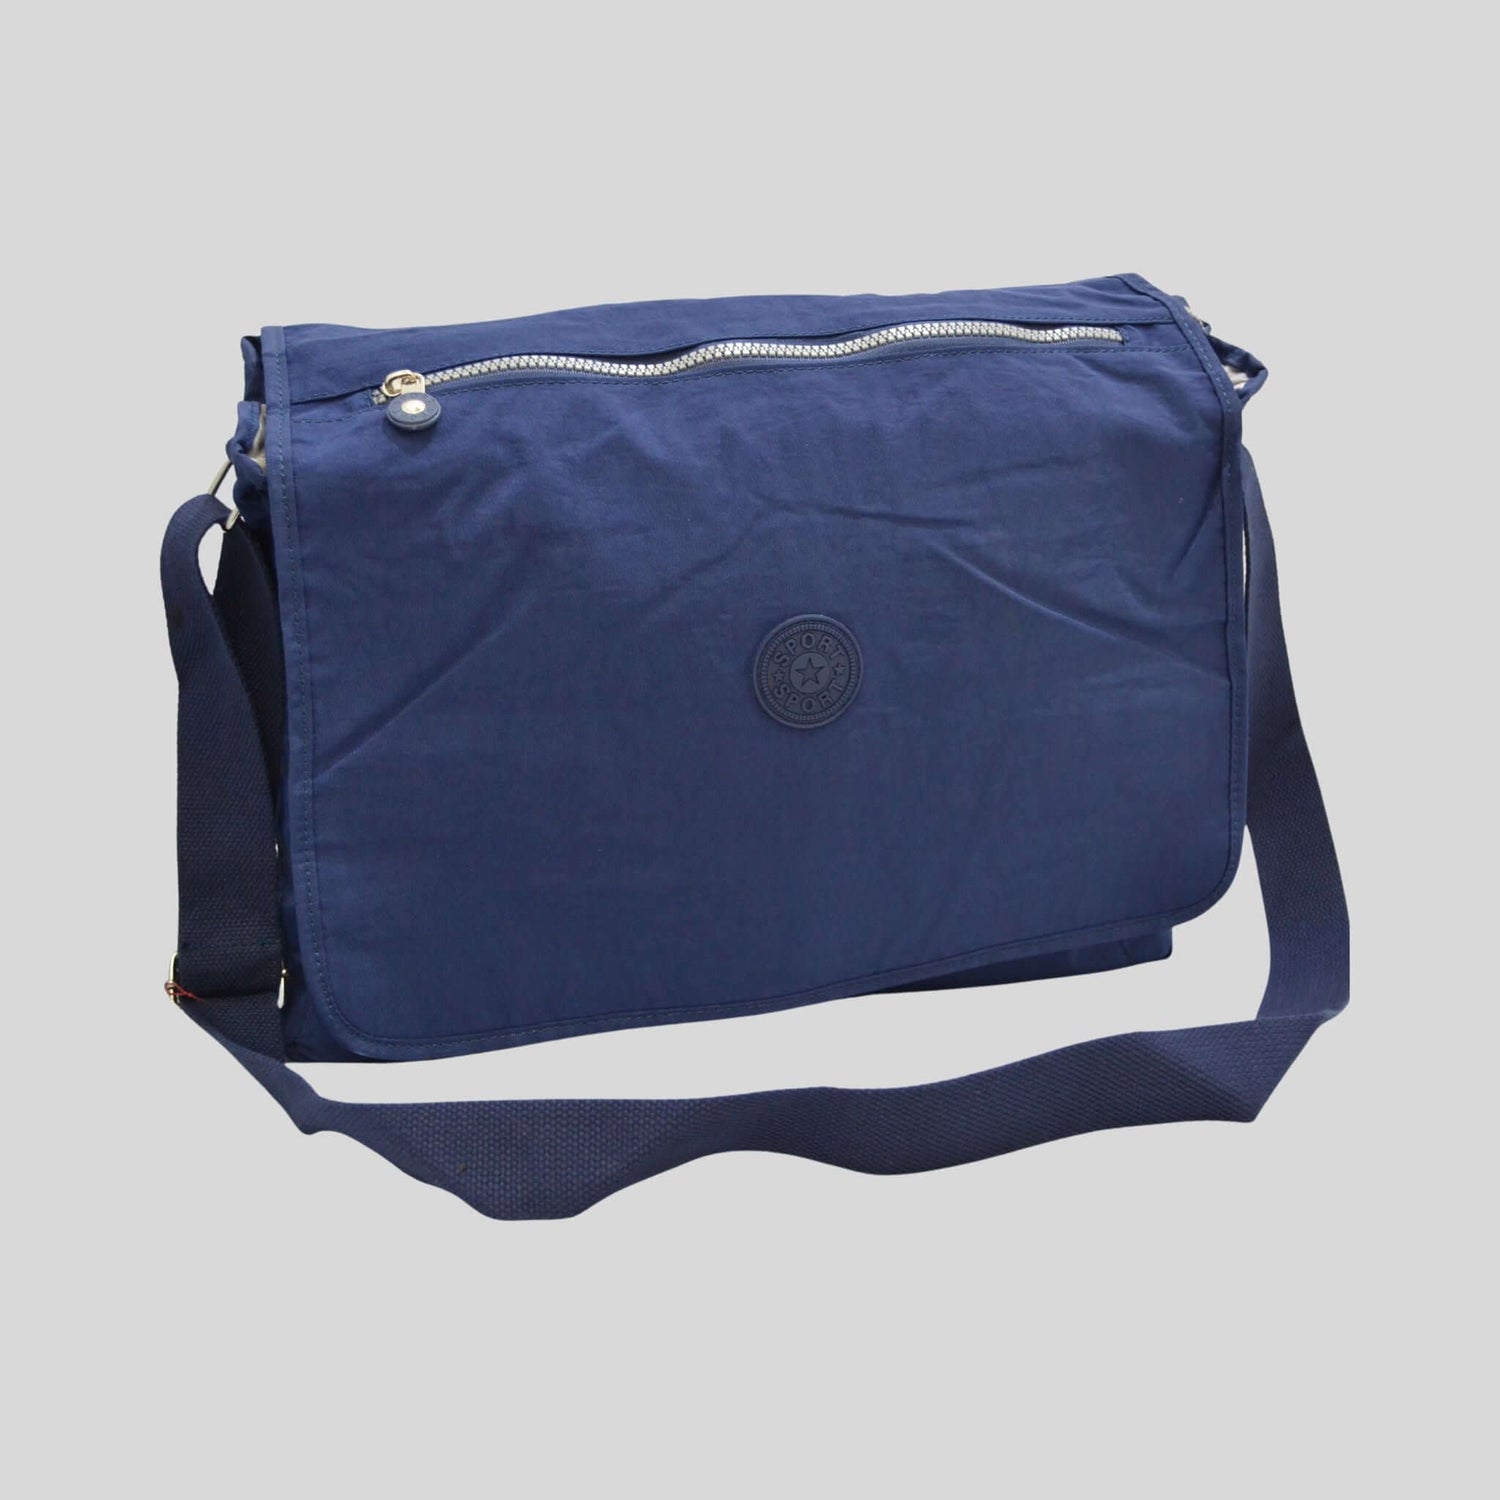 Navy Blue Messenger/Laptop Bag